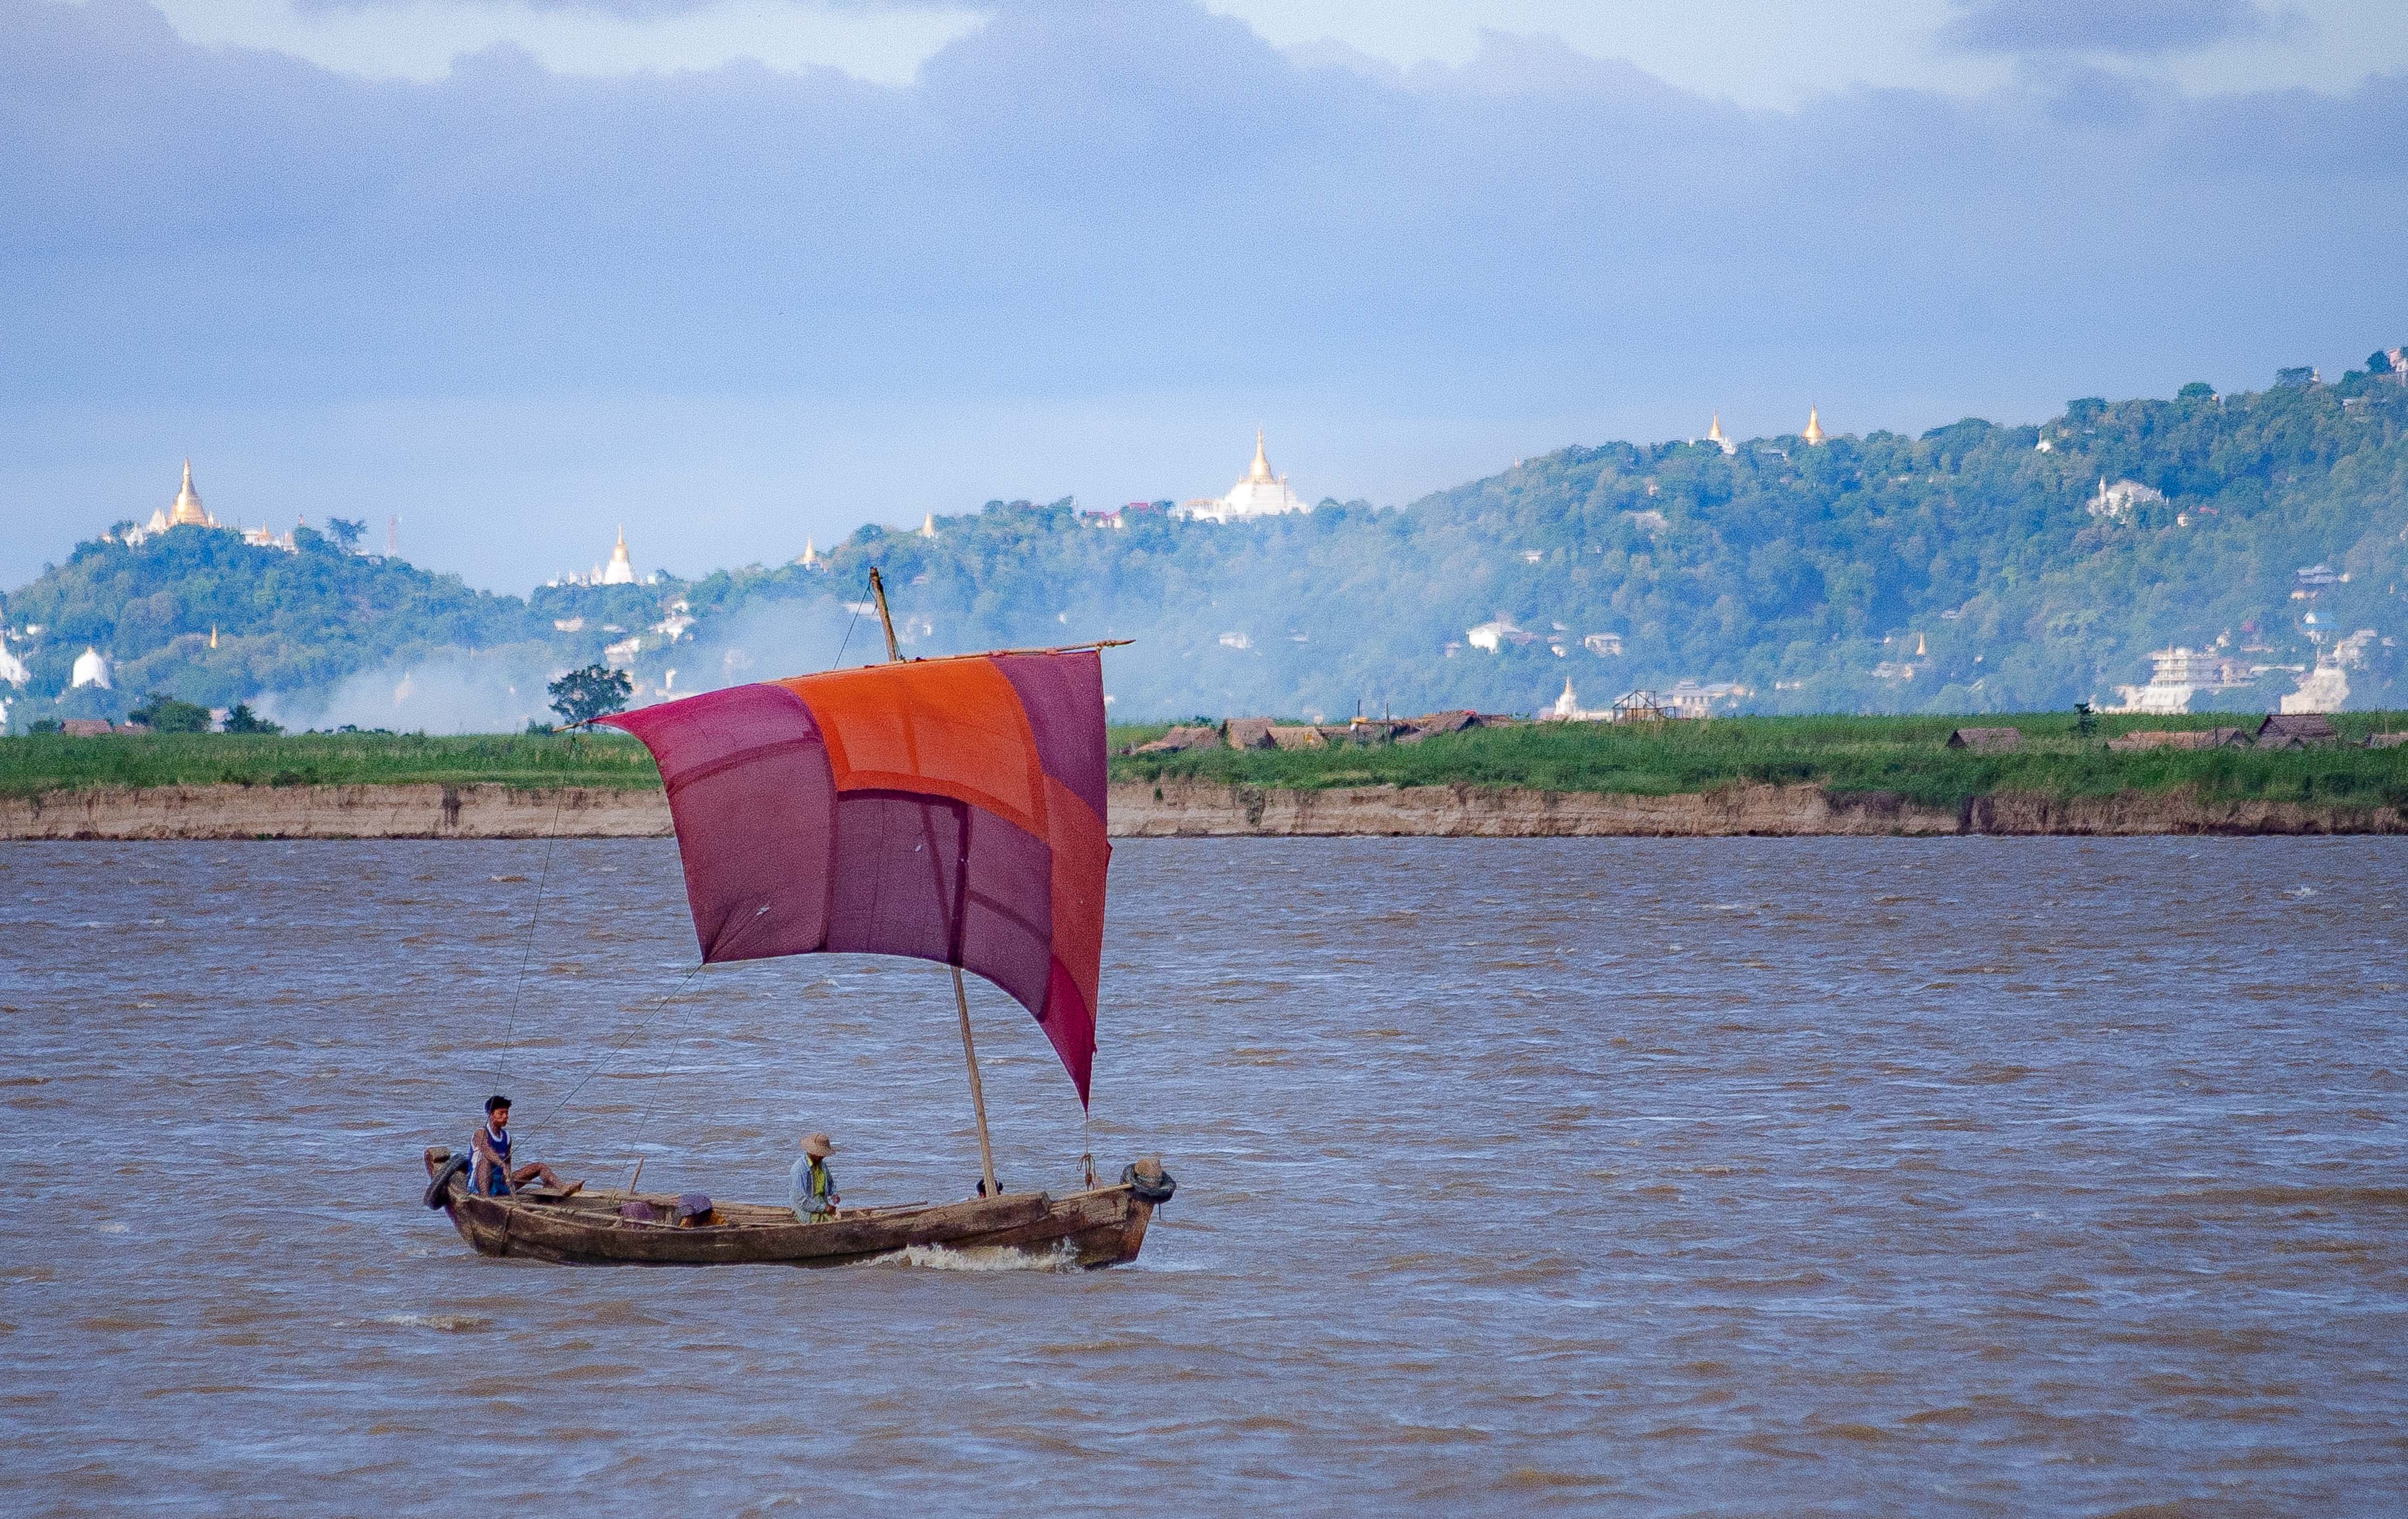 Myanmar, Unknown Prov, Boat, 2009, IMG 4135